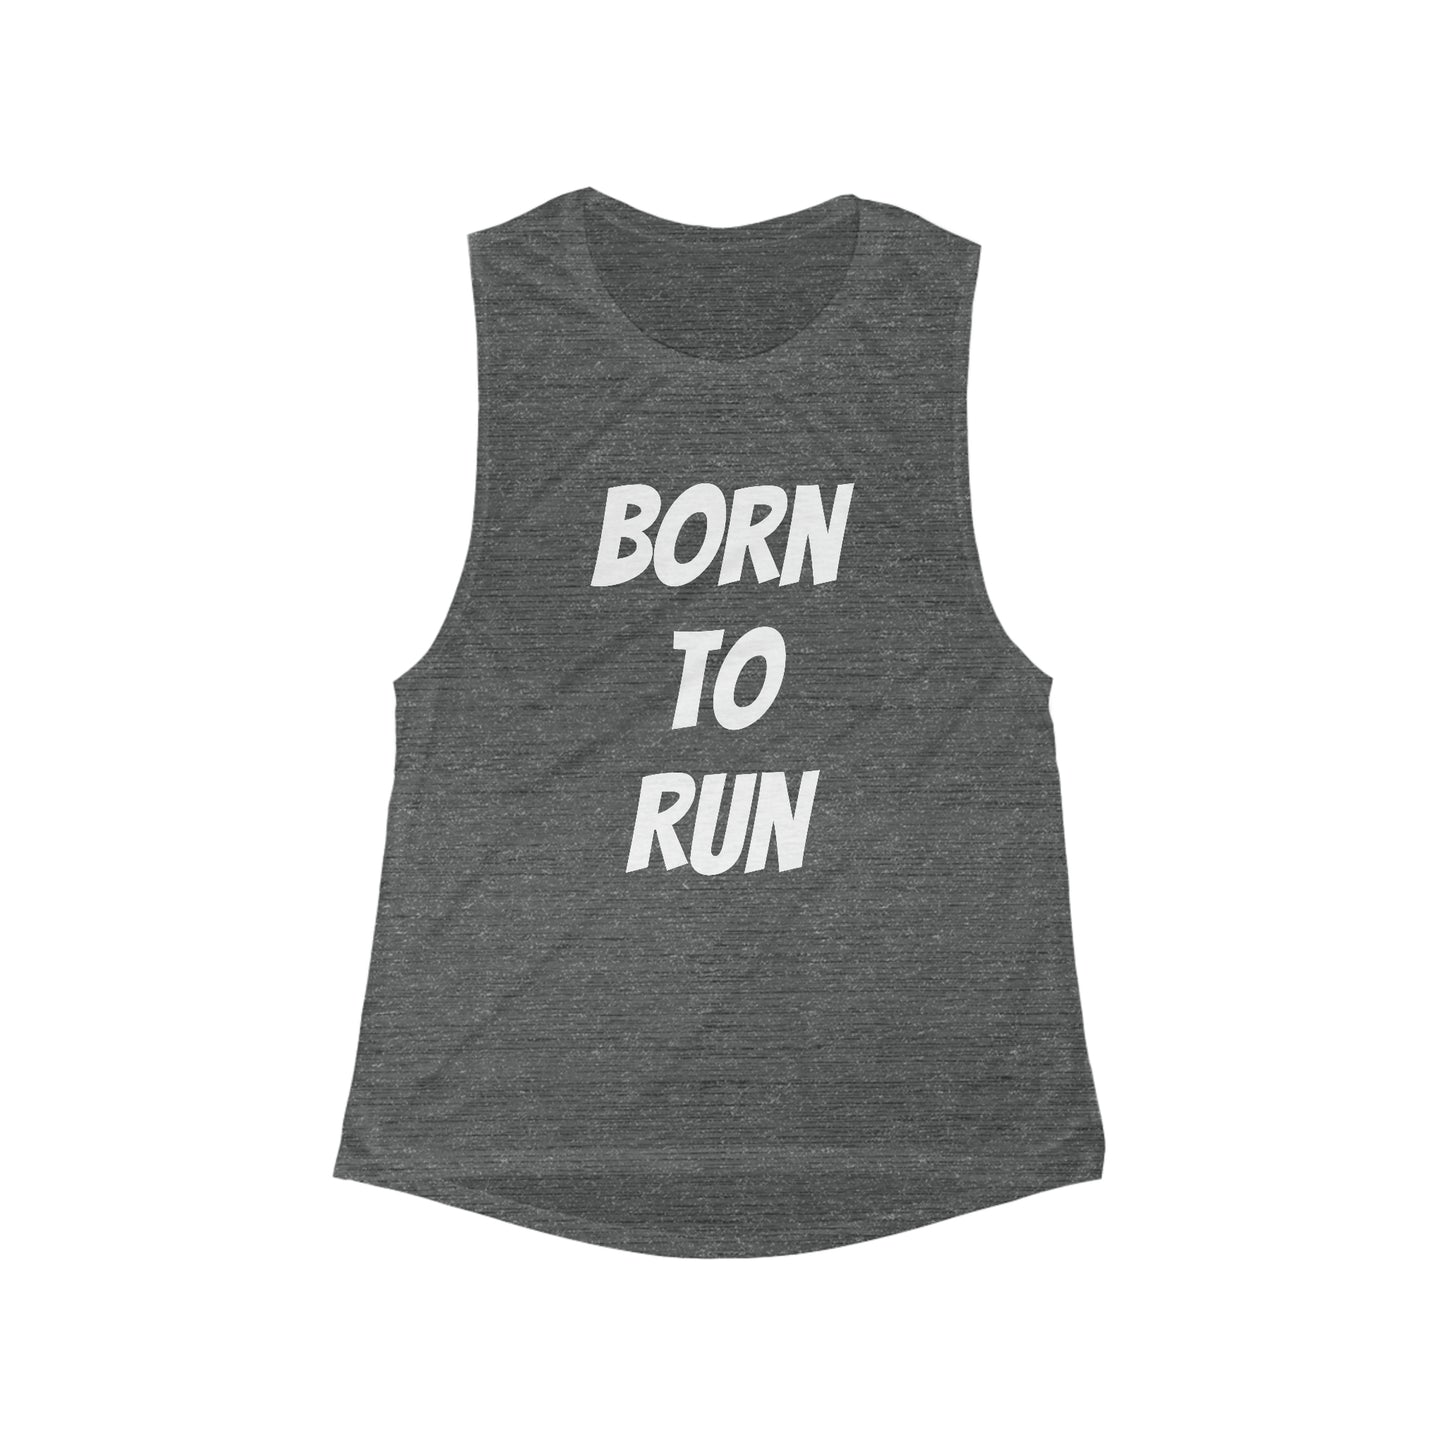 Born to Run - Women's Flowing Breeze Muscle Tee: Lightweight, Versatile, and Comfortable